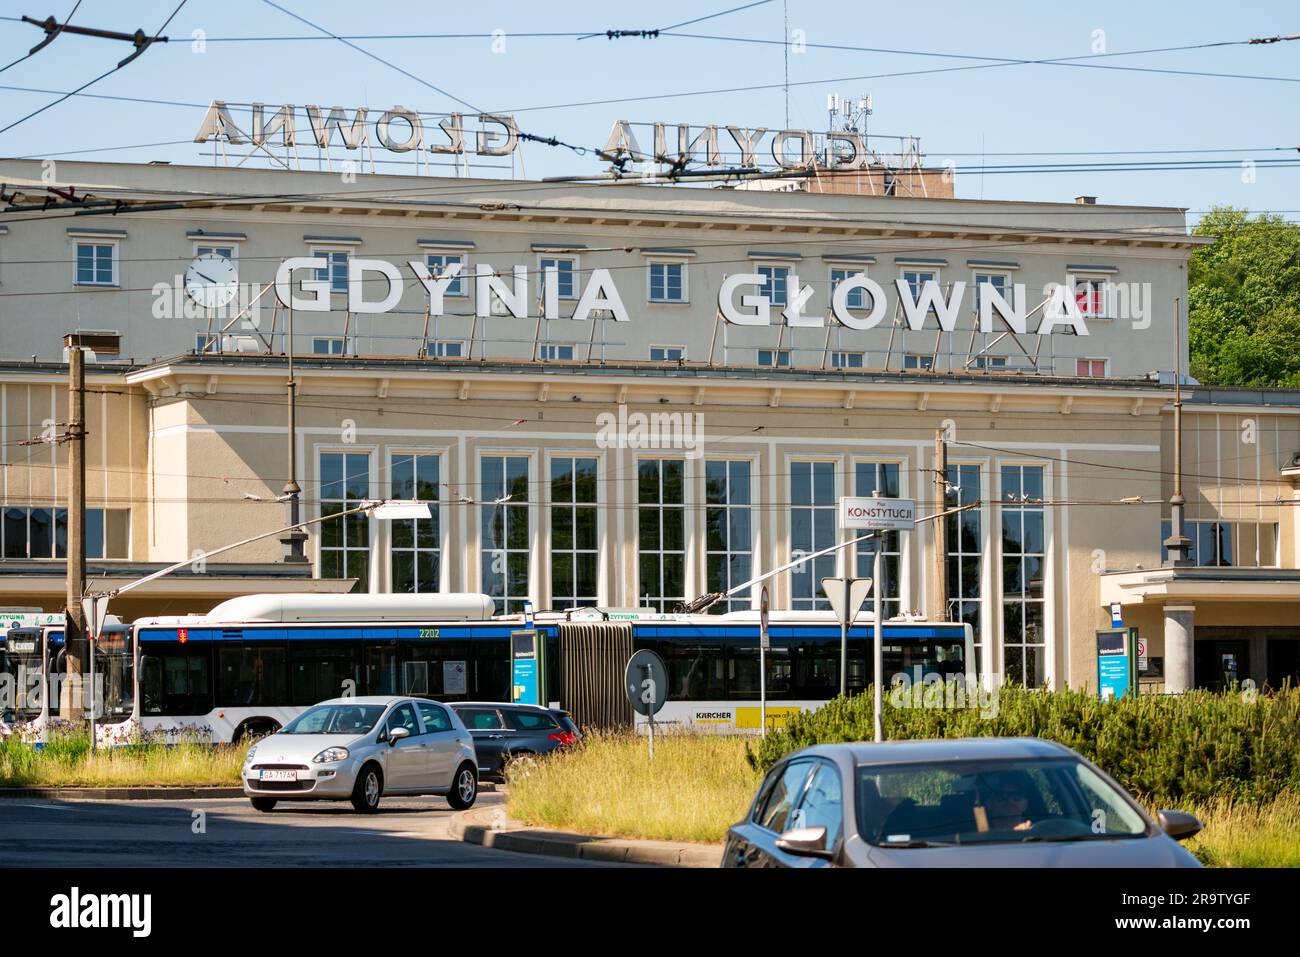 Bahnhof Gdynia, Bahnhof Gdynia Glowna, Bahnhof, Bahnhof, Gdynia Polen, Tricity, Tourismus, Reisen, Pendeln, Polen, polnischer Ostseebad Stockfoto